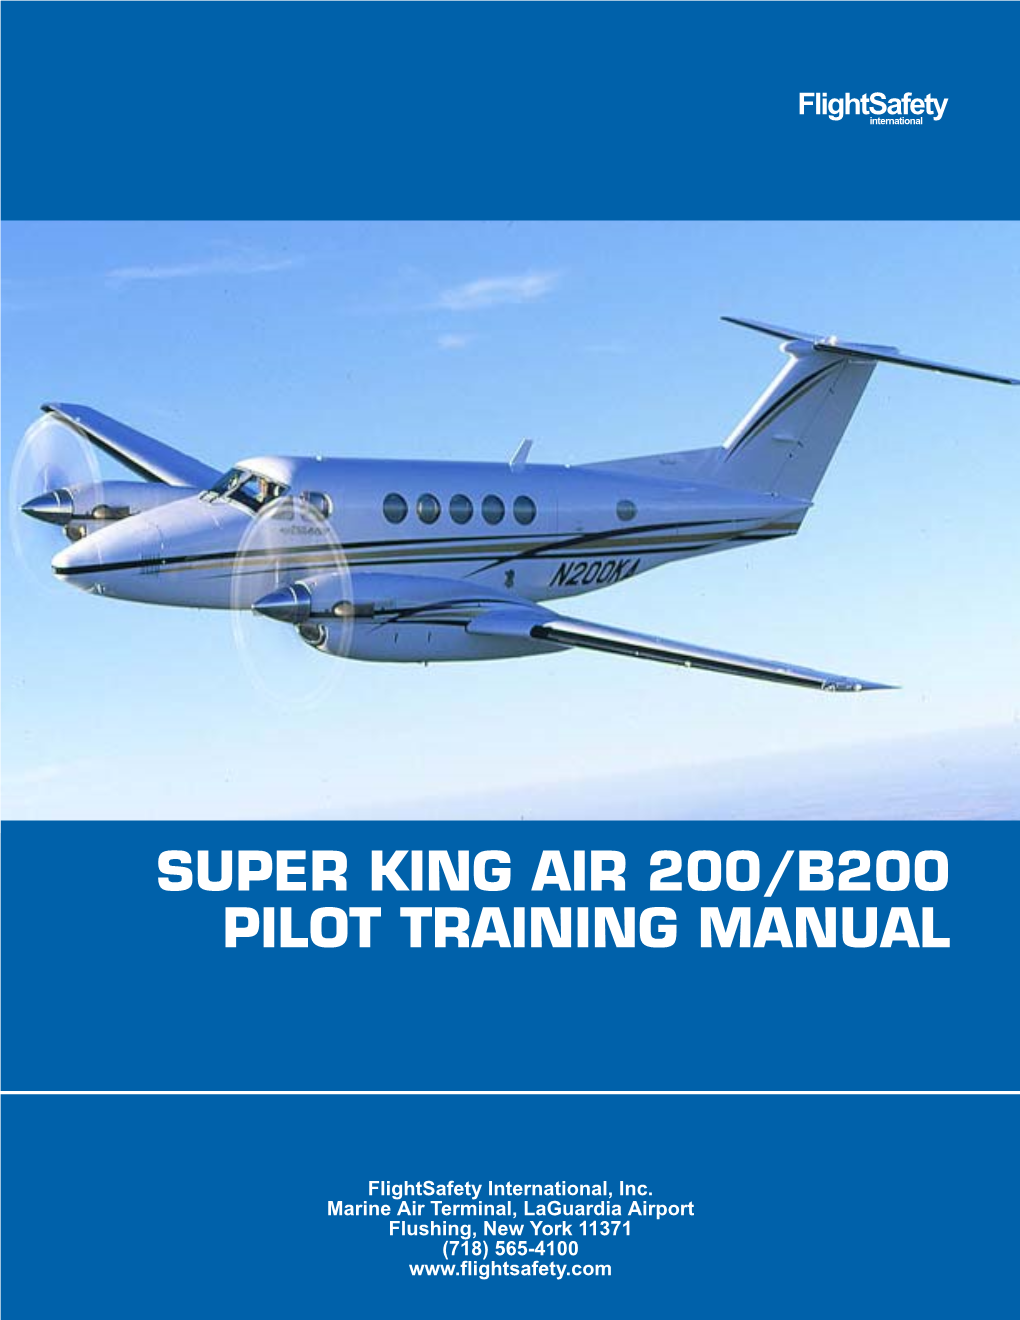 Super King Air 200/B200 Pilot Training Manual